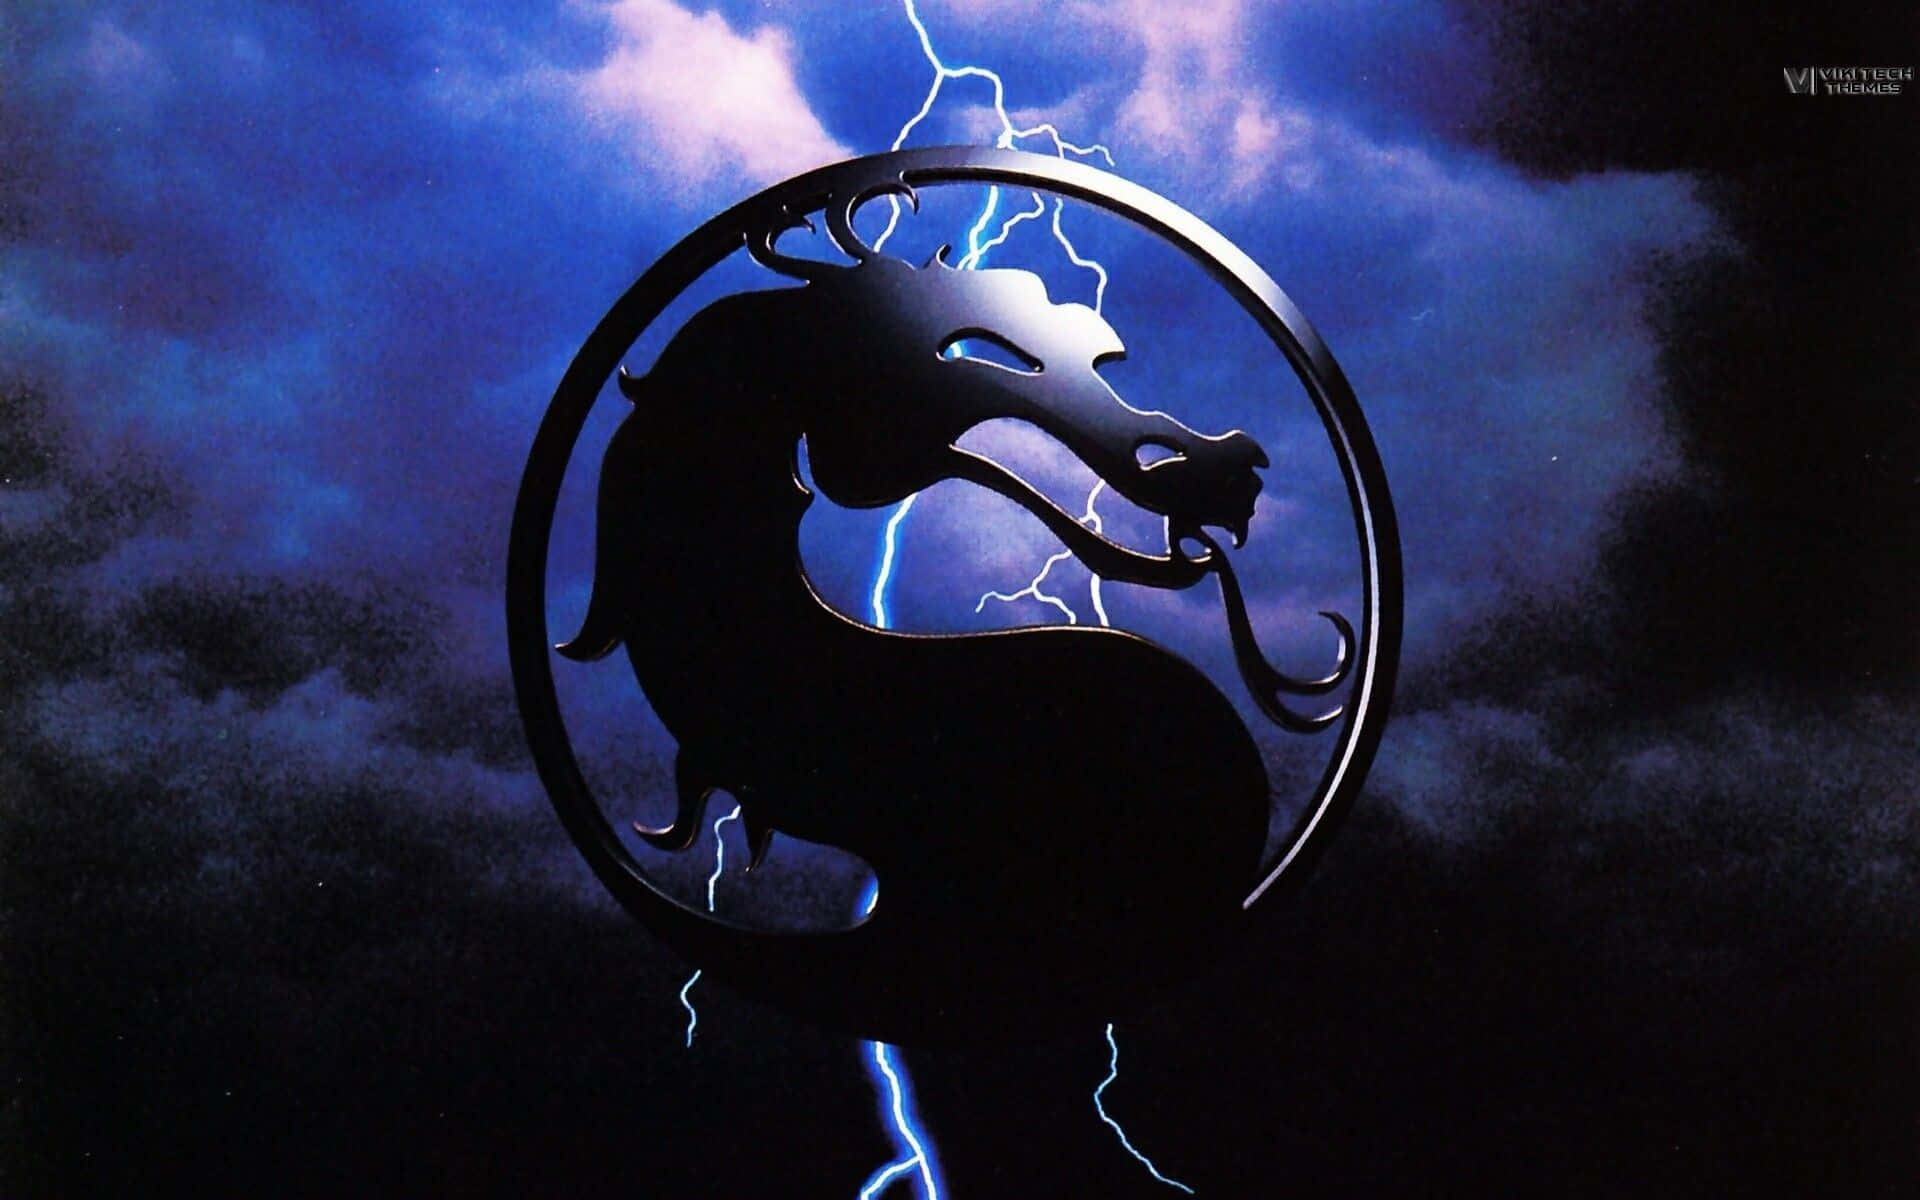 Raiden, the Thunder God, unleashes his electrifying powers in Mortal Kombat Wallpaper